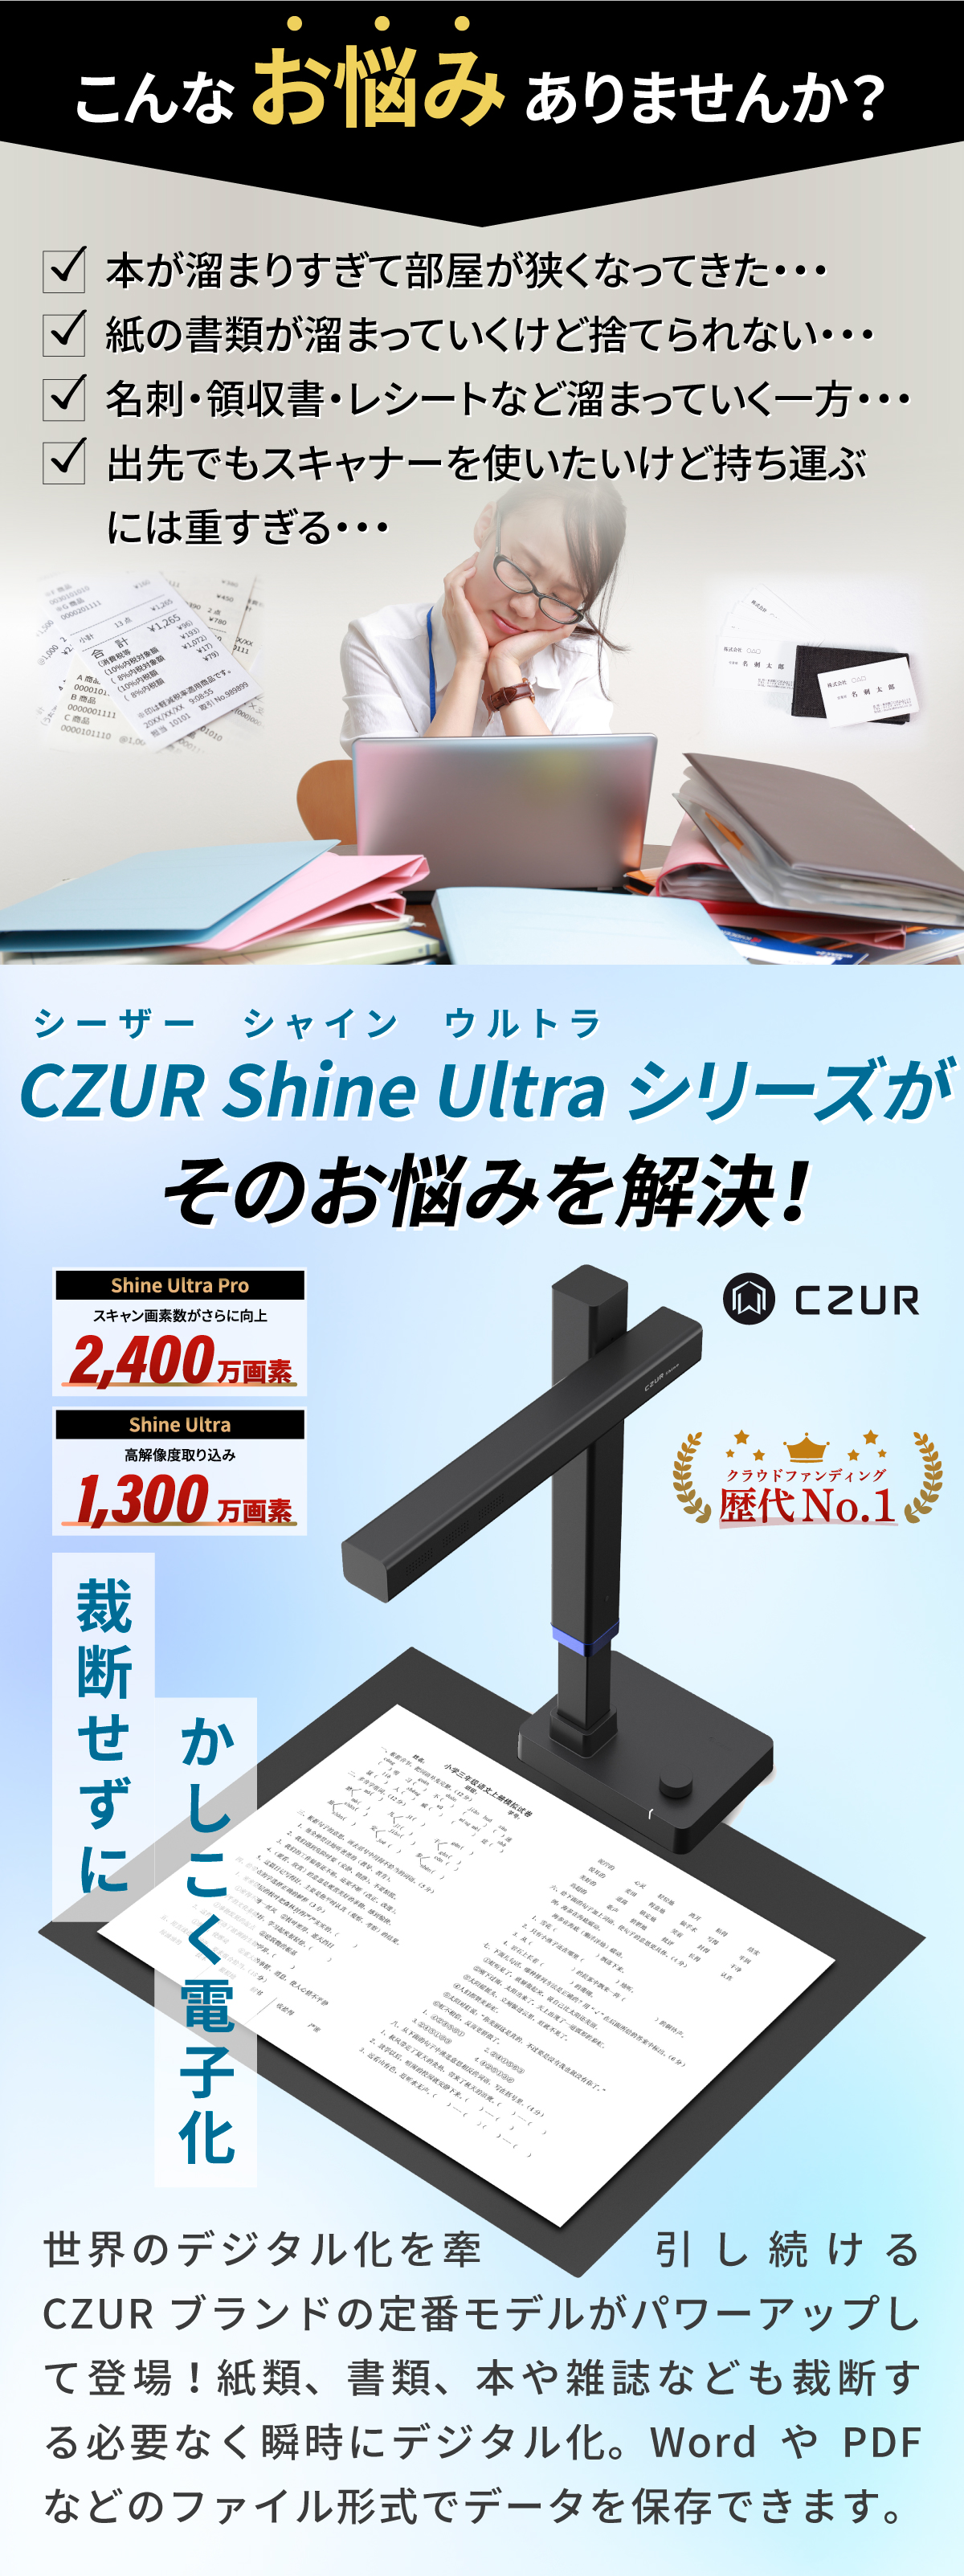 正規販売店】CZUR Shine Ultra Pro 平坦化 非破壊 非裁断 スキャナ OCR 